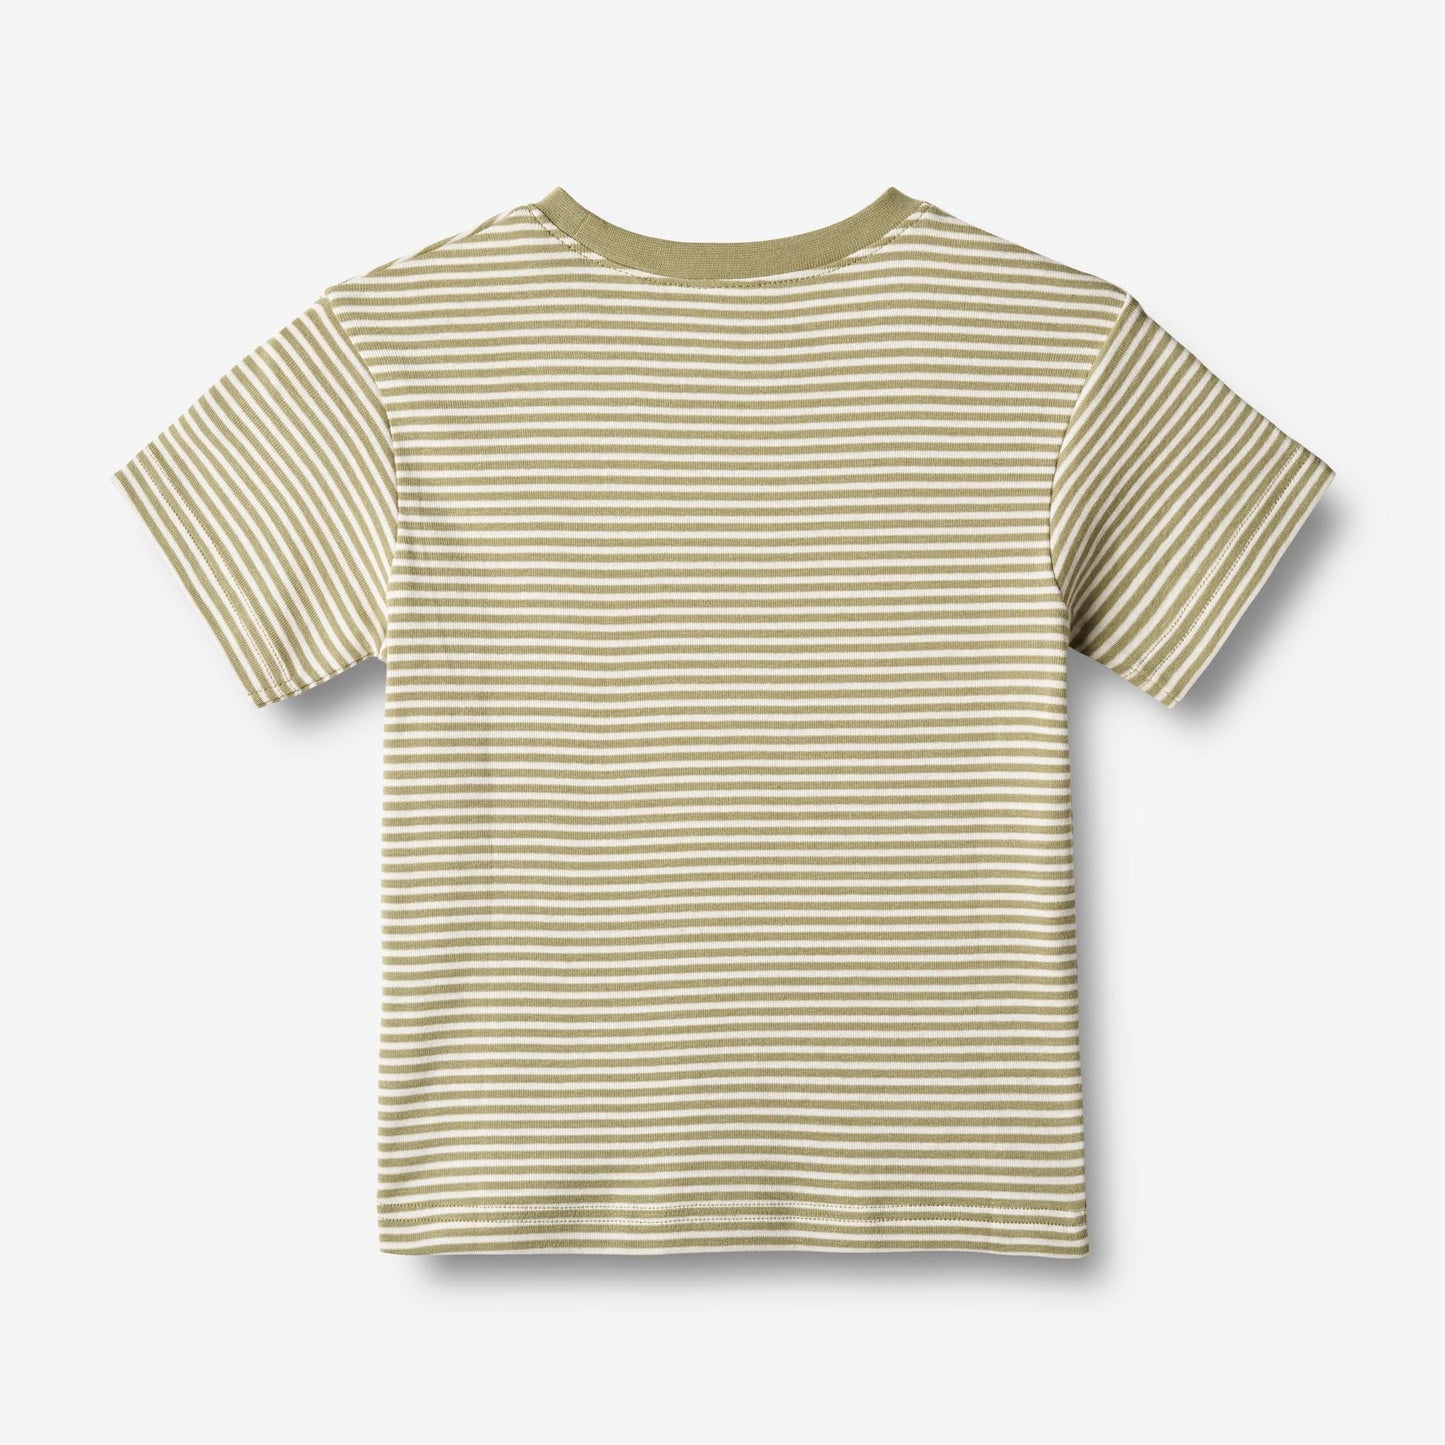 Wheat 'Fabian' Children's T-Shirt - Sage Green